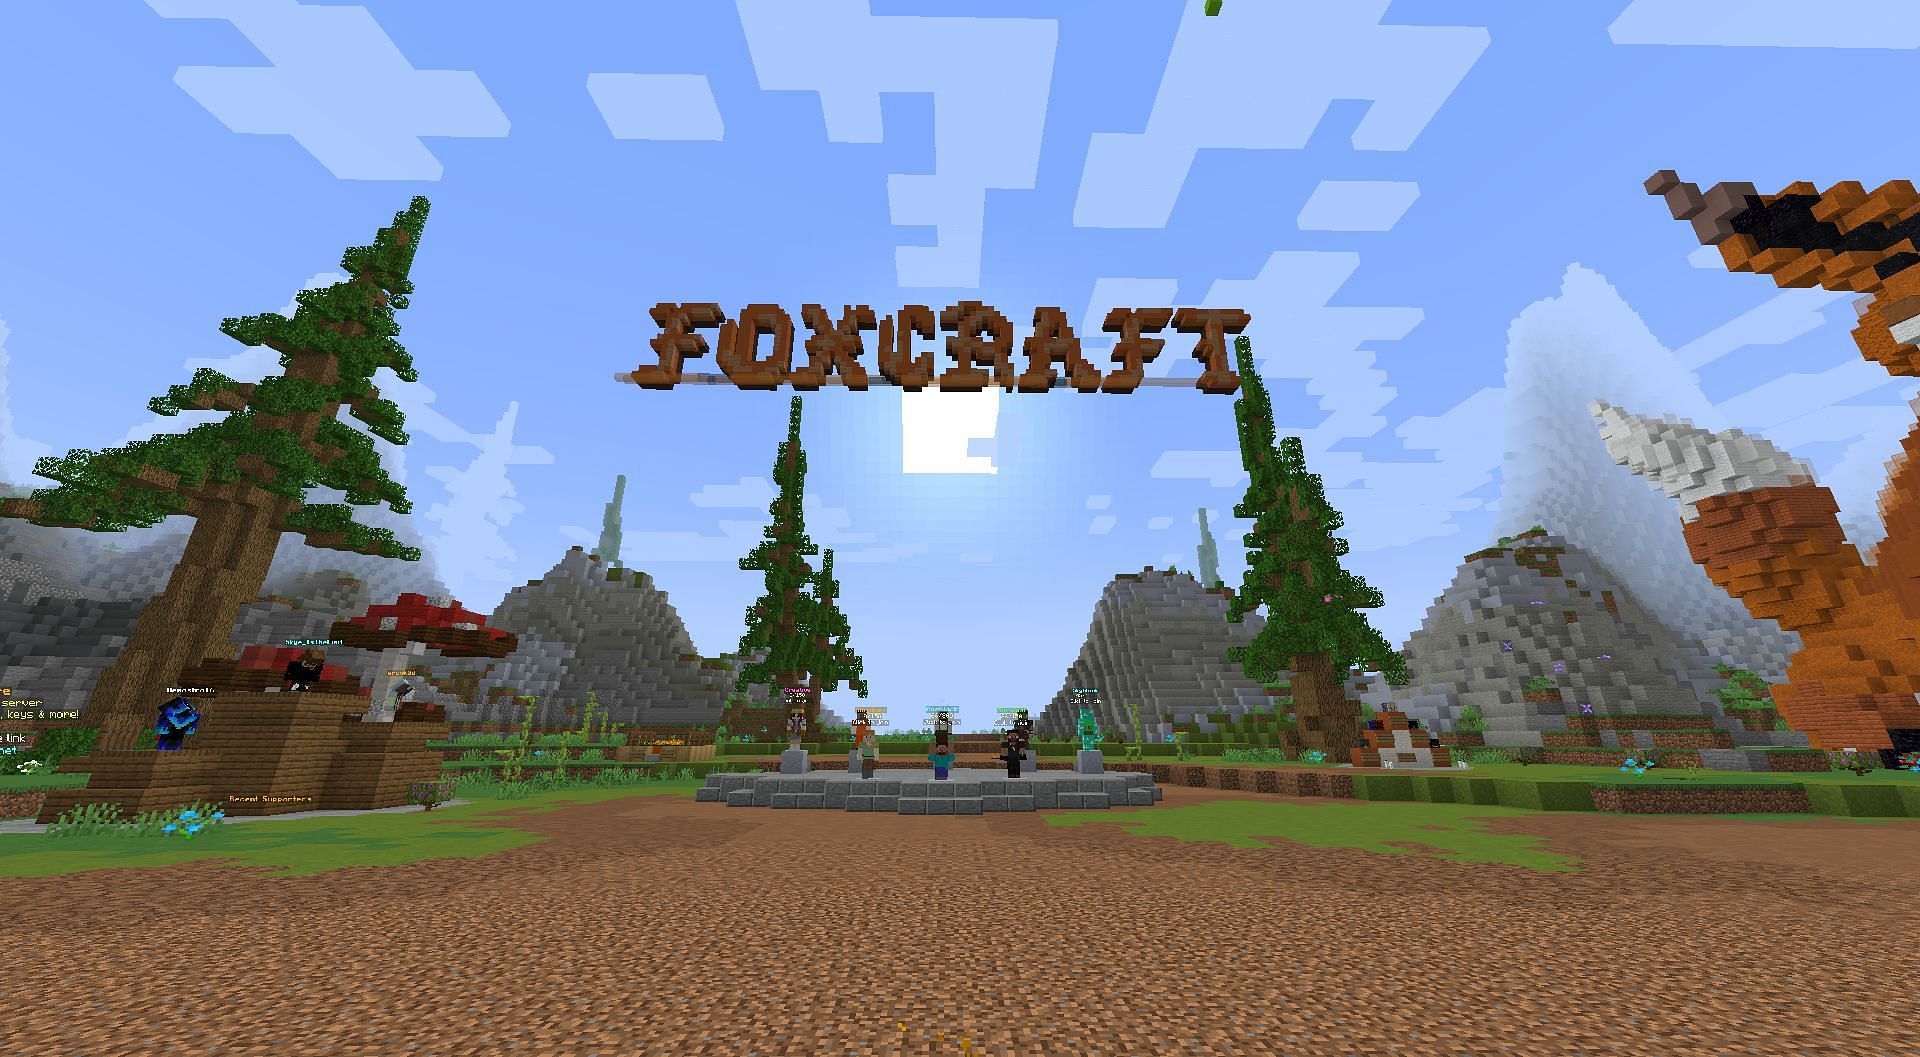 Foxcraft spawn (Image via Minecraft)